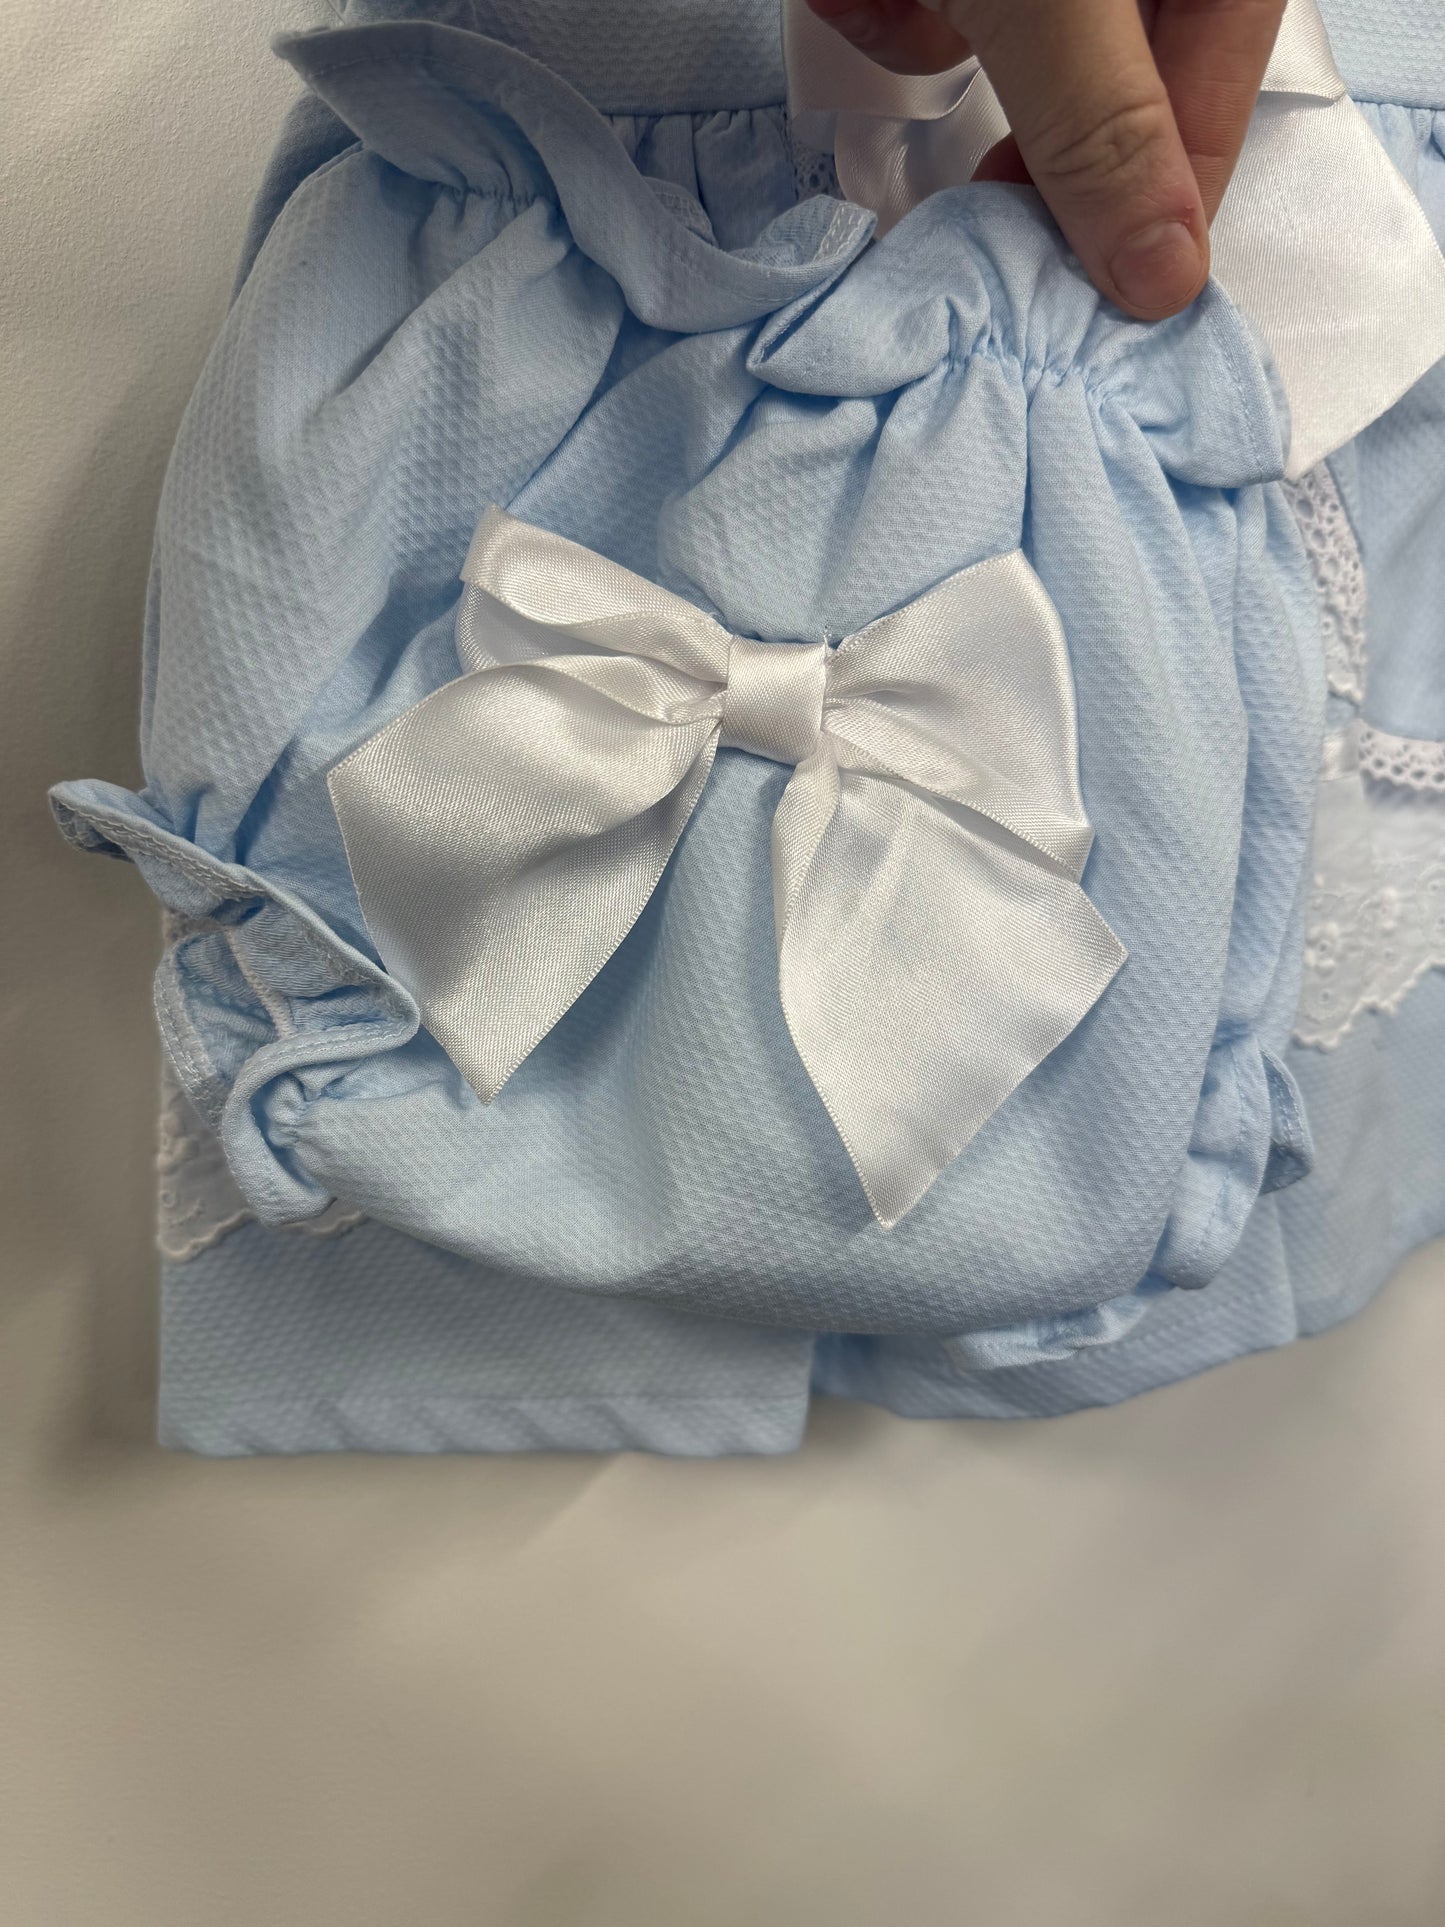 Blue bow dress & knickers💙